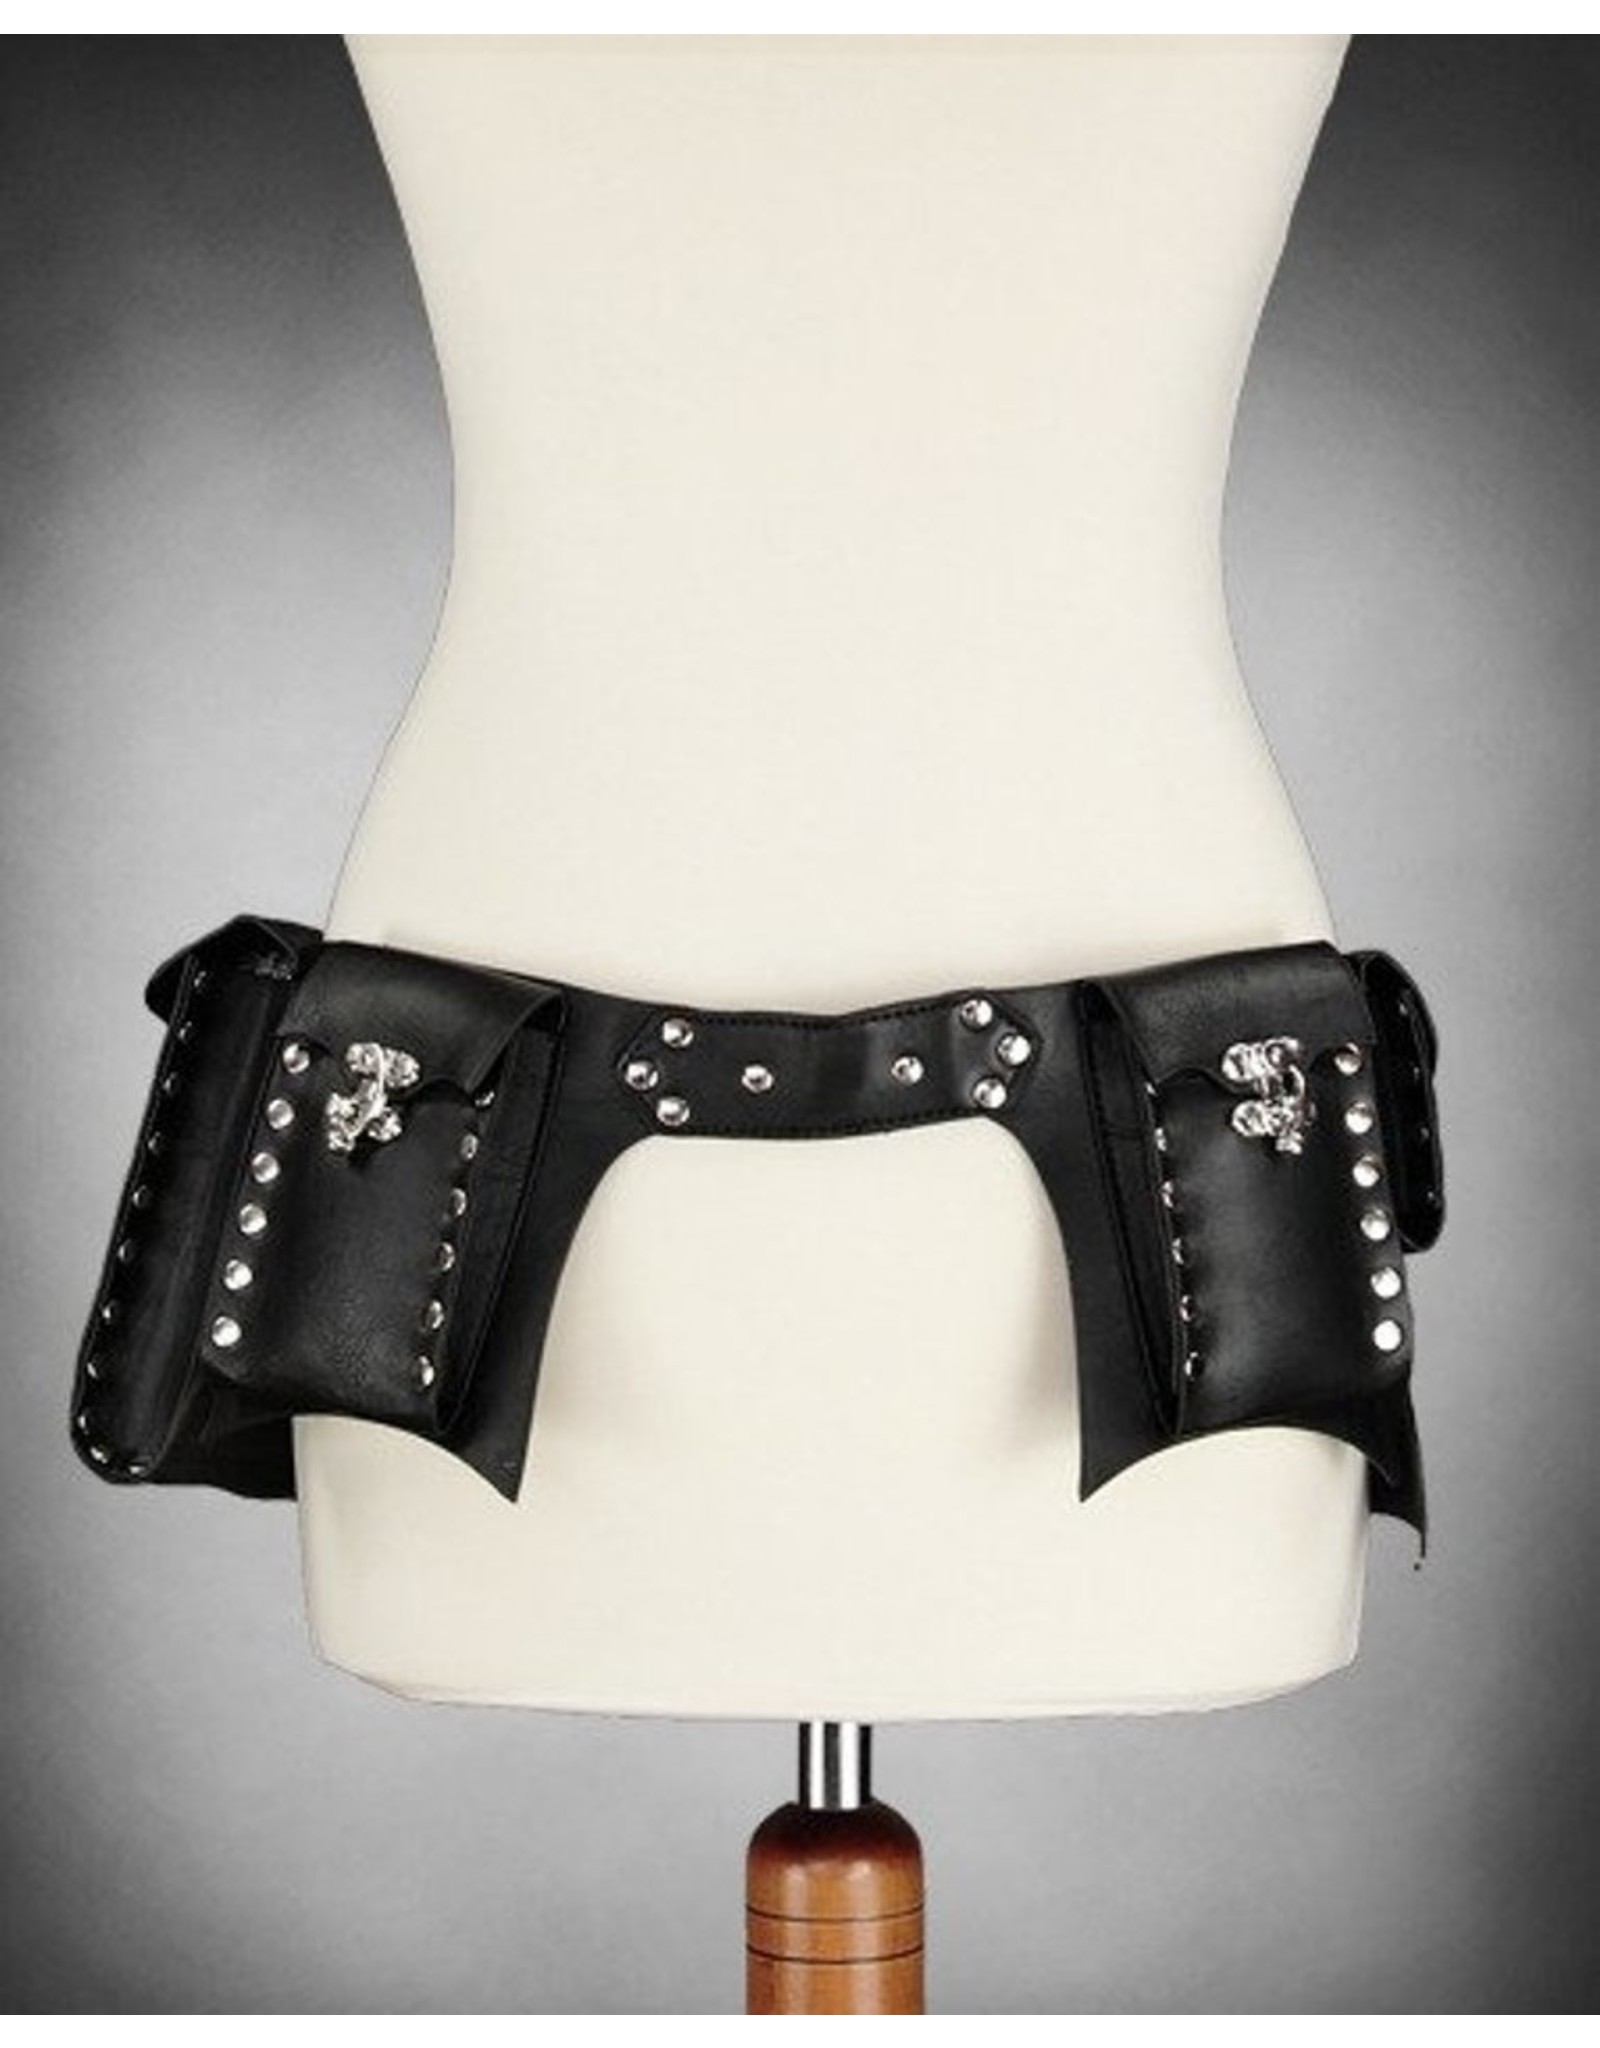 Restyle Gothic and Steampunk accessories - Restyle Steampunk Pocket Belt (black)